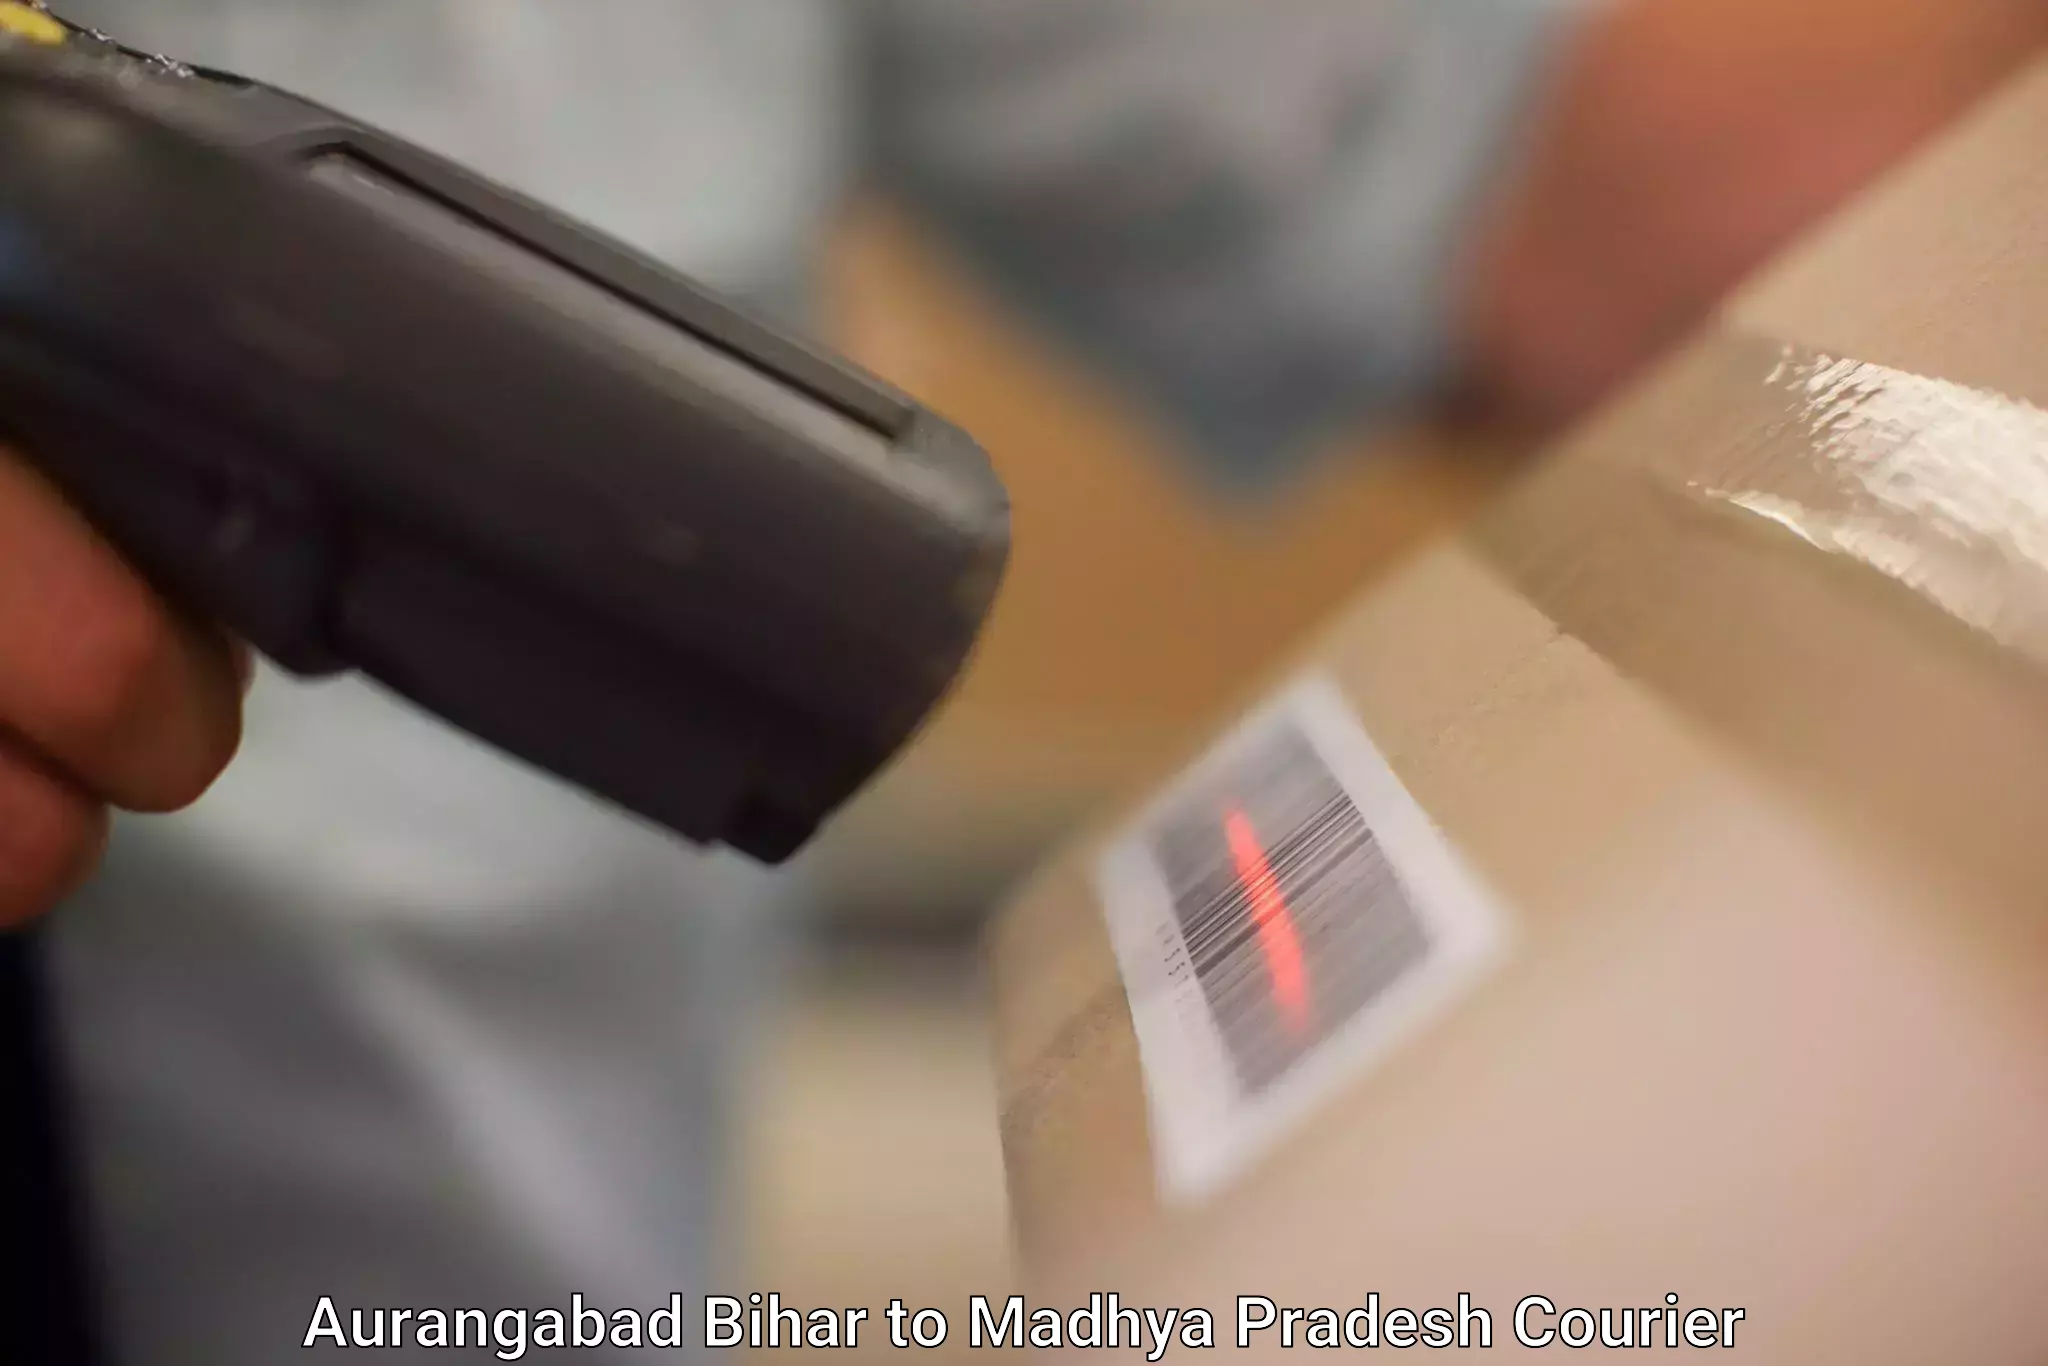 Pharmaceutical courier Aurangabad Bihar to Kukshi